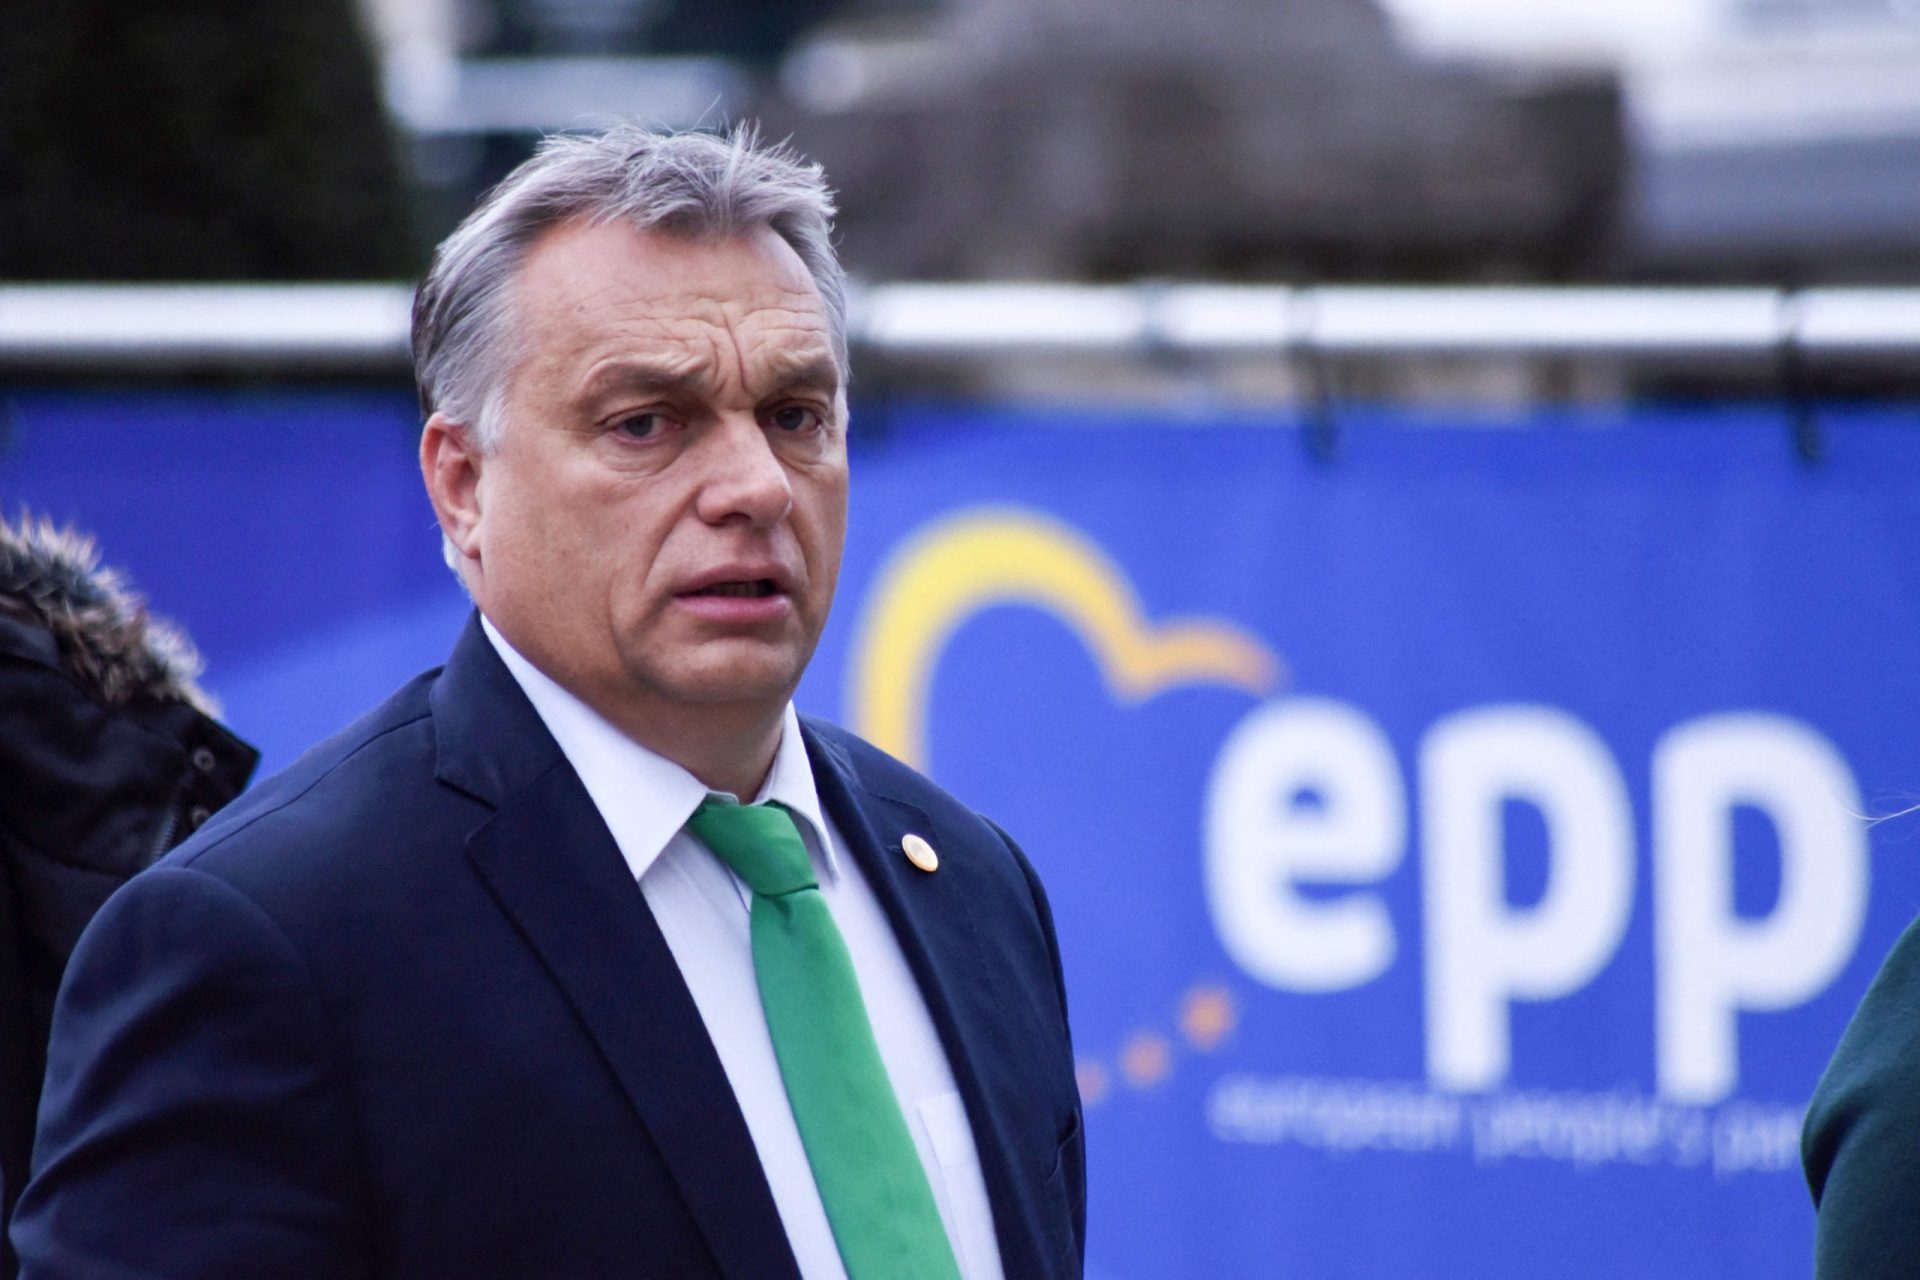 Fidesz de Órban abandona bancada do PPE